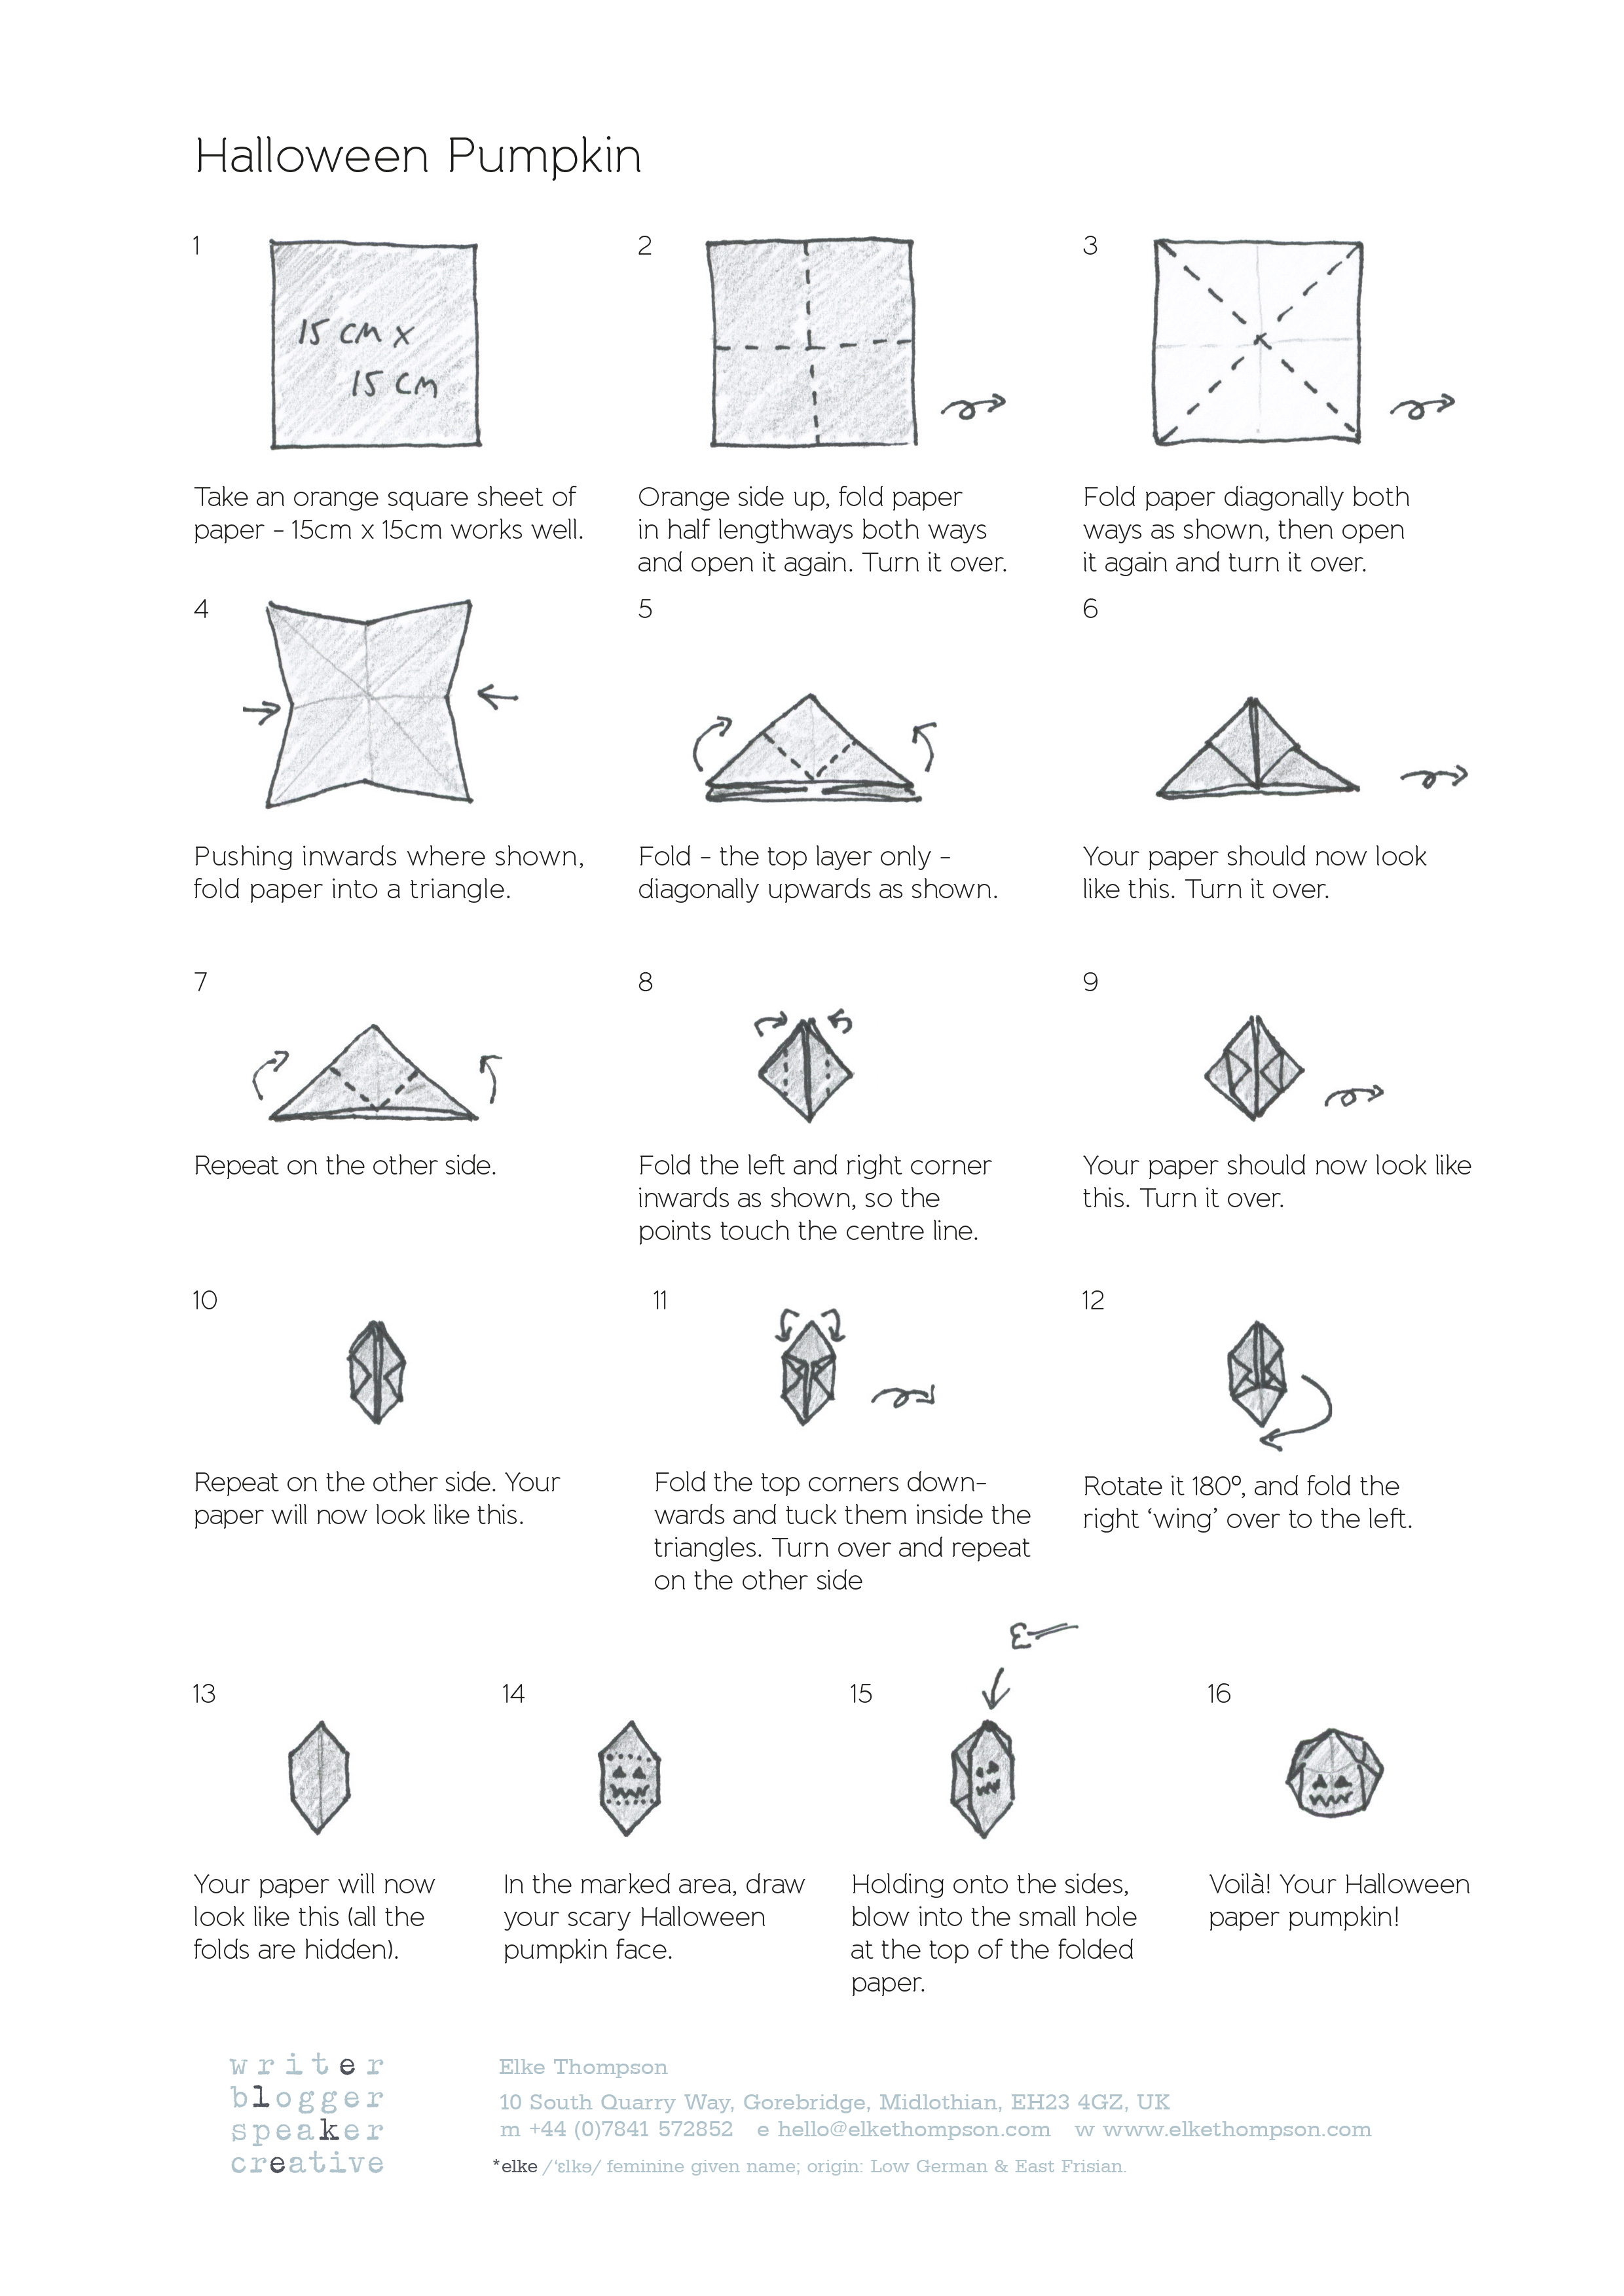 Origami pumpkin folding instructions by Elke Thompson